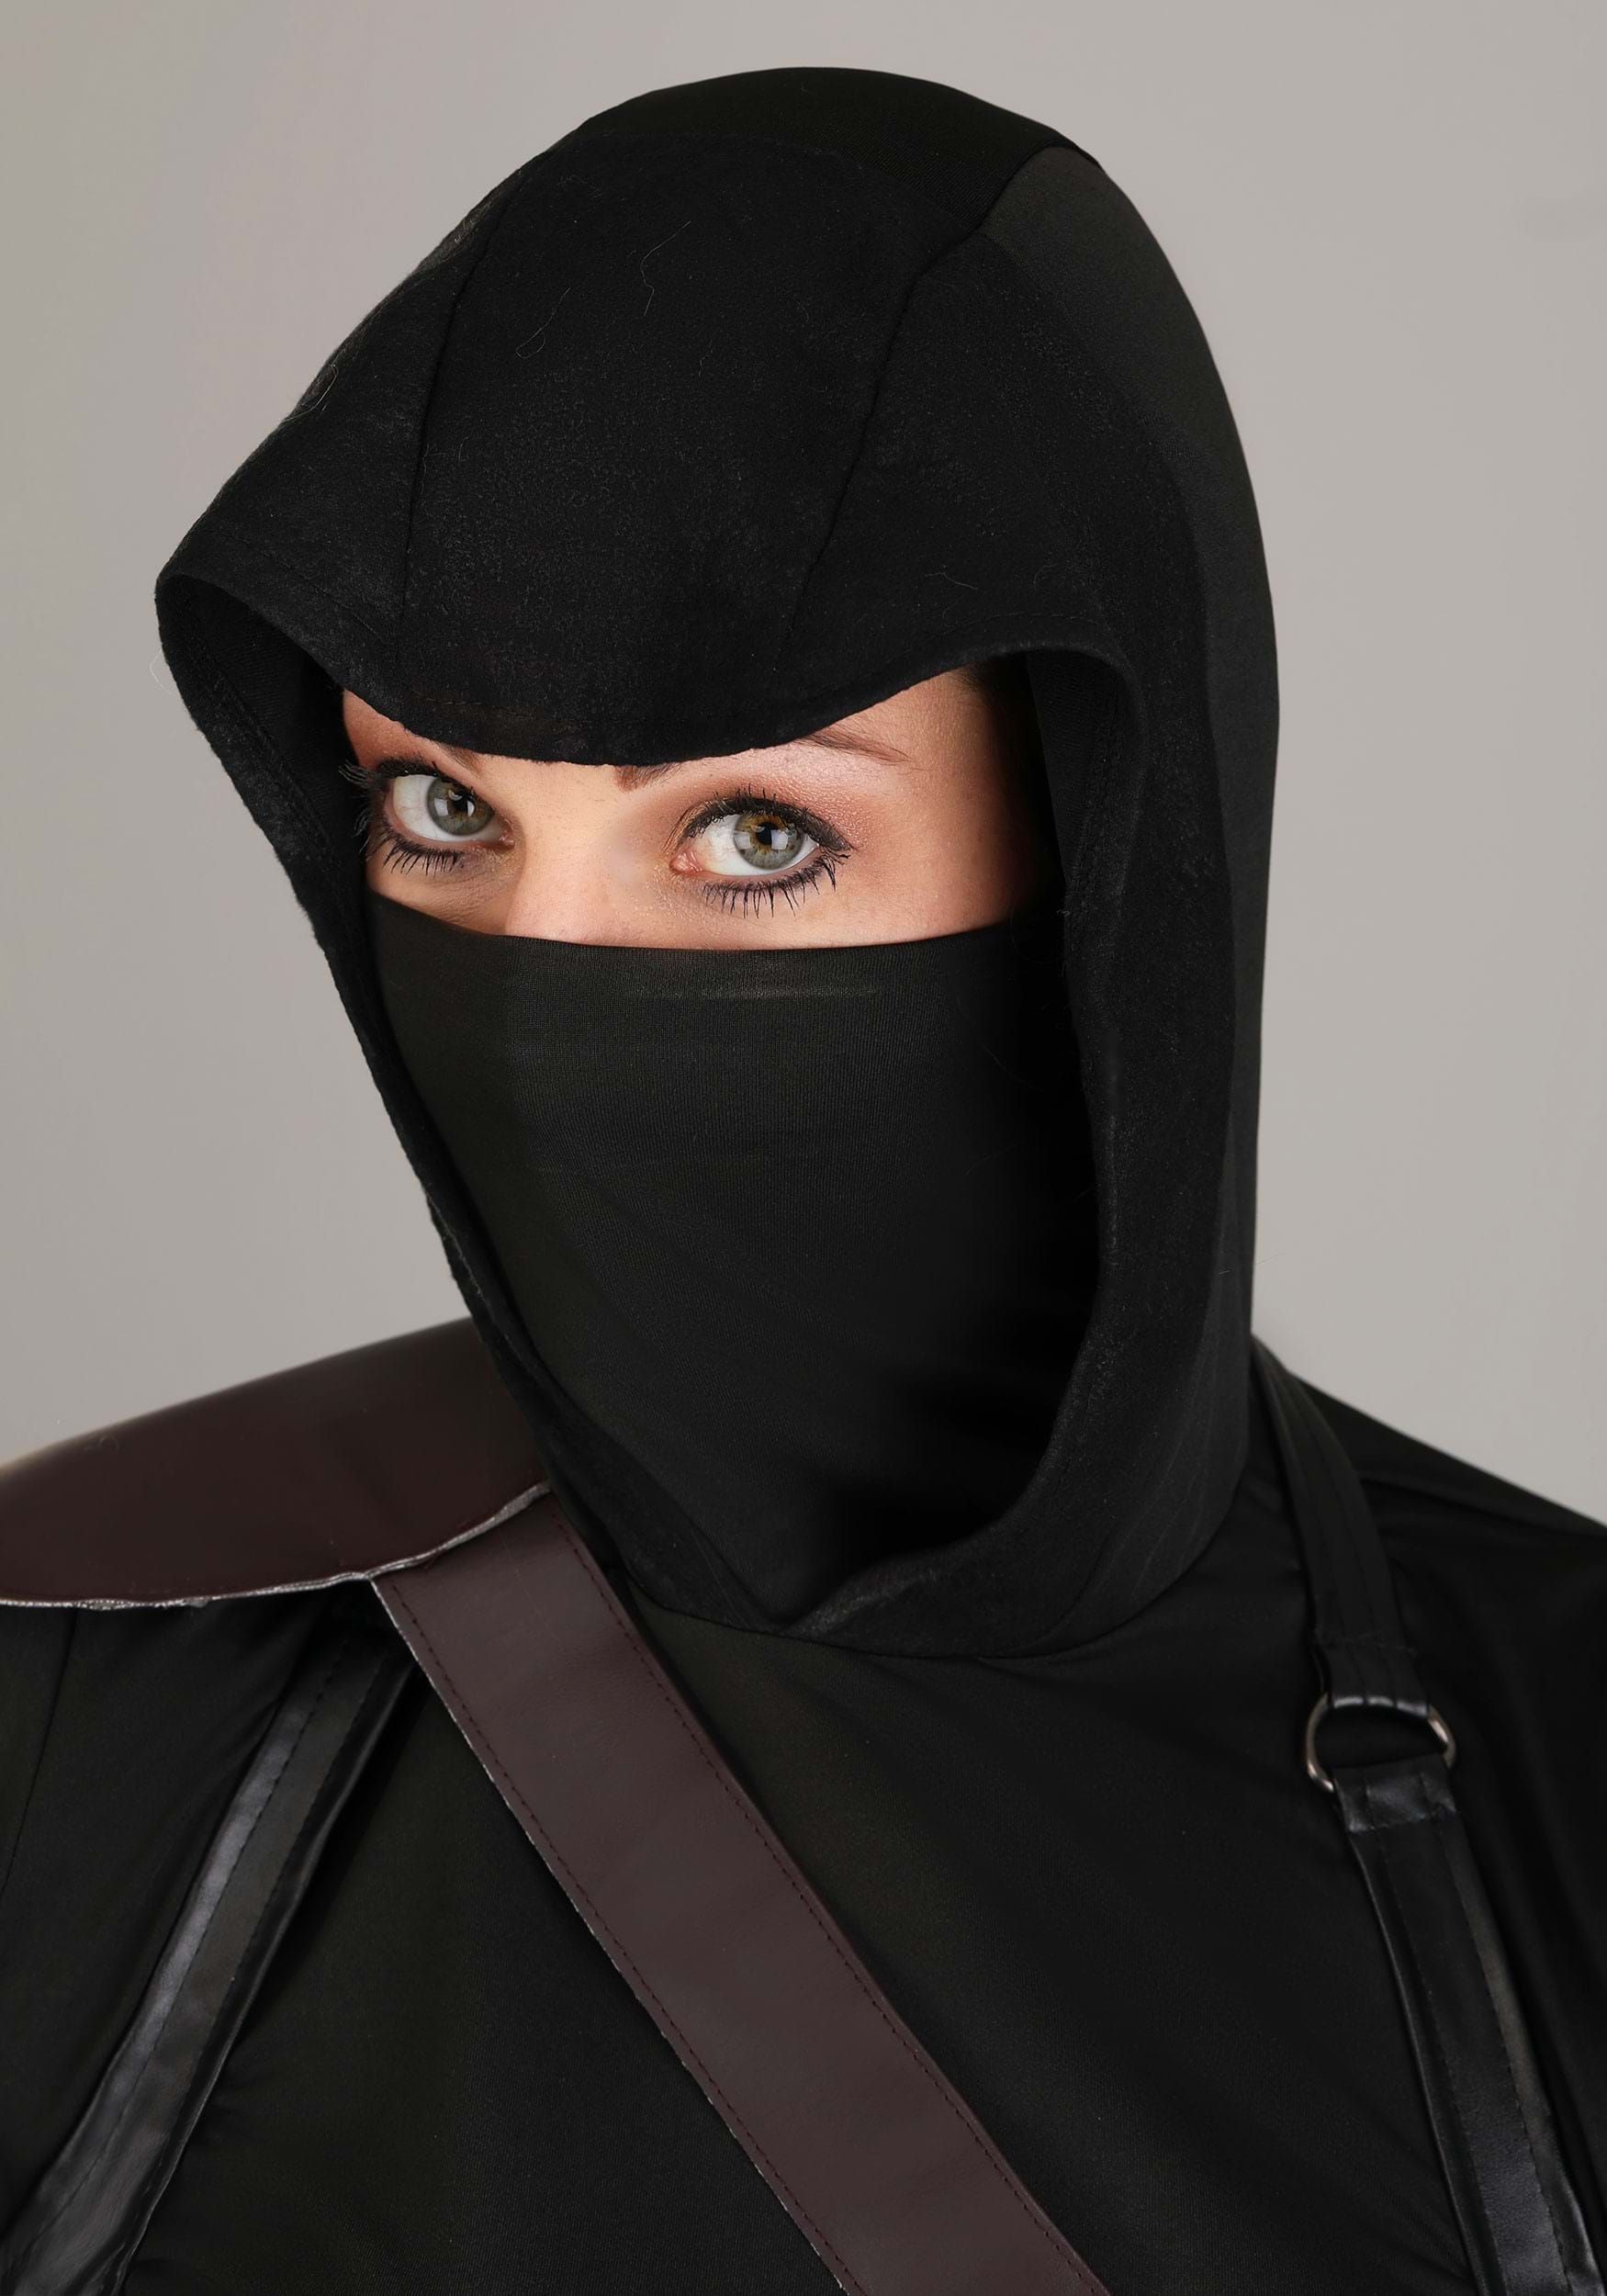 Ninja Assassin Costume, Men's Ninja Costumes